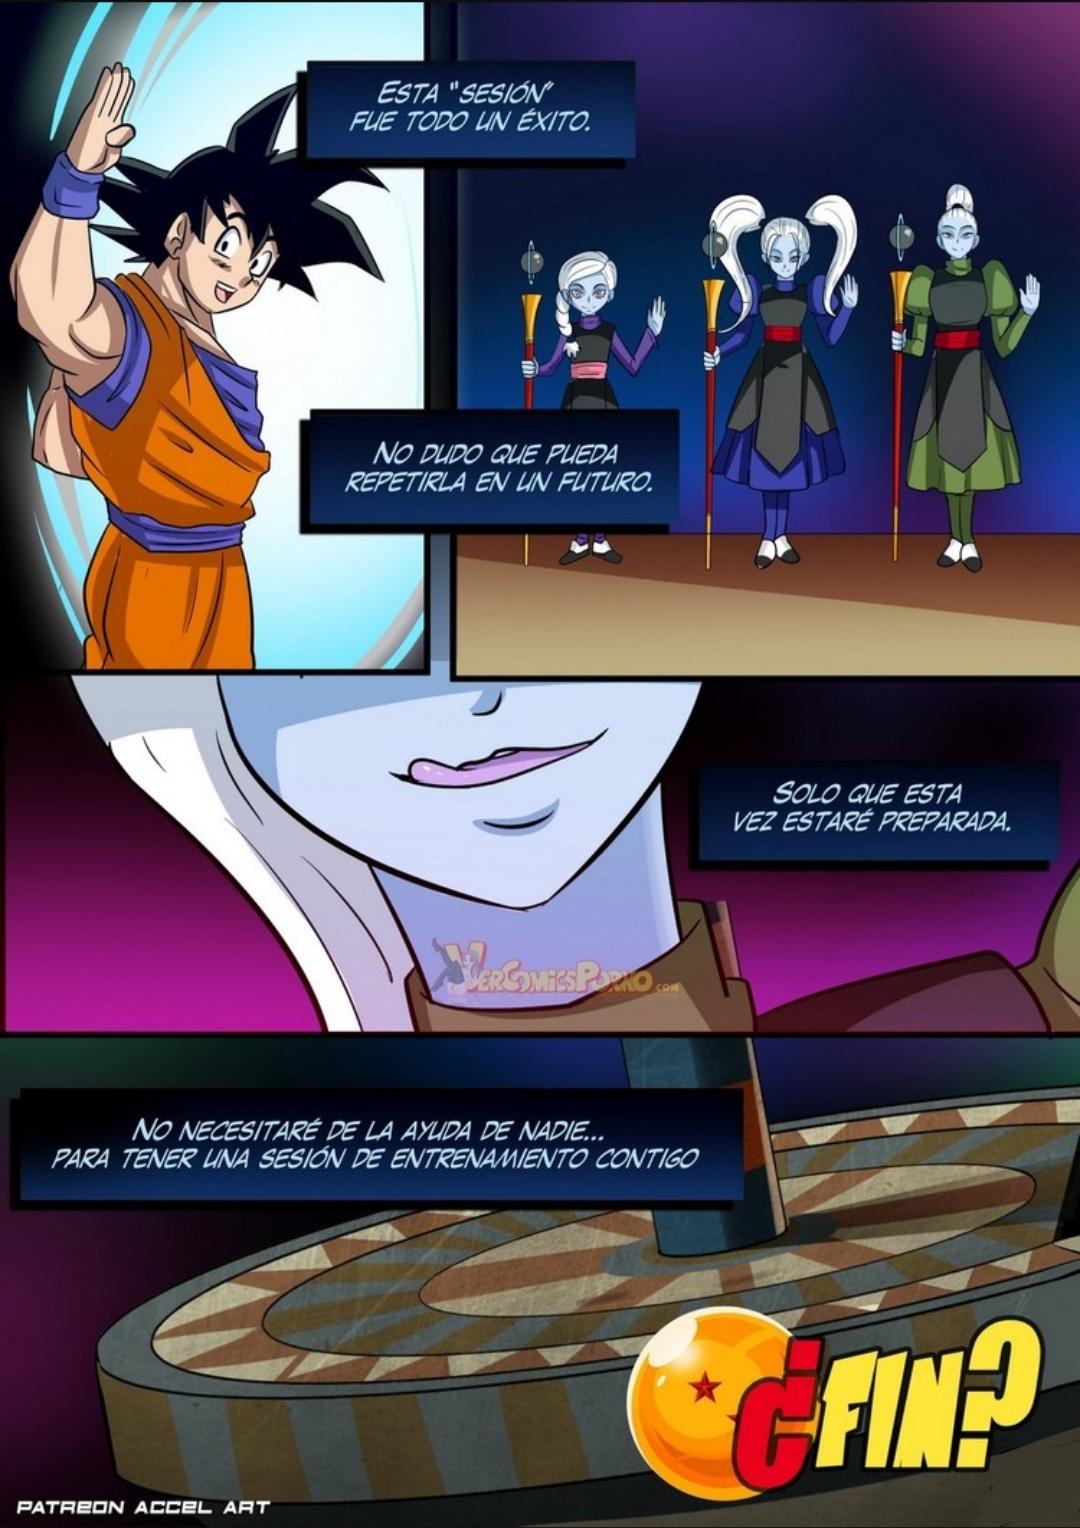 Goku's special training